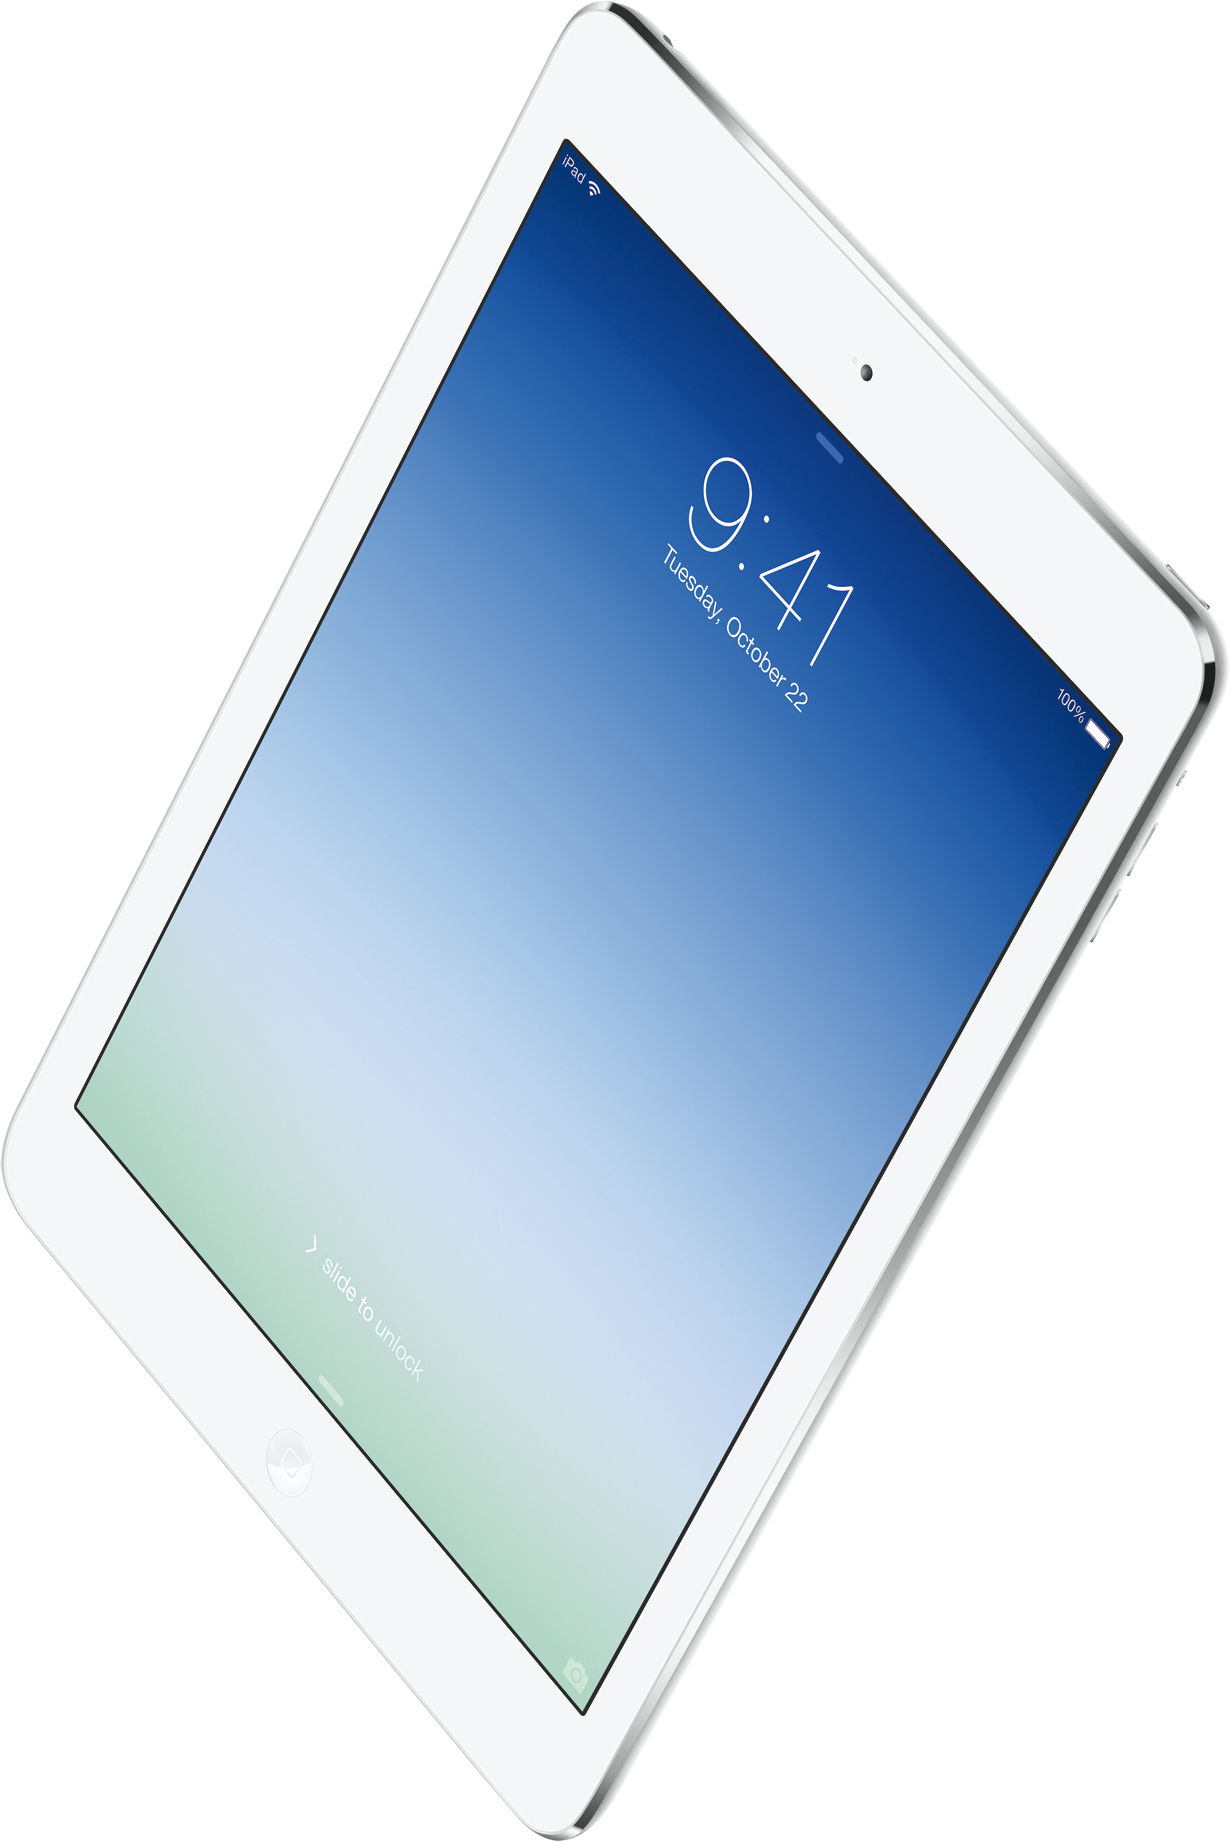 IPad Air and iPad mini with Retina display Apple new product High